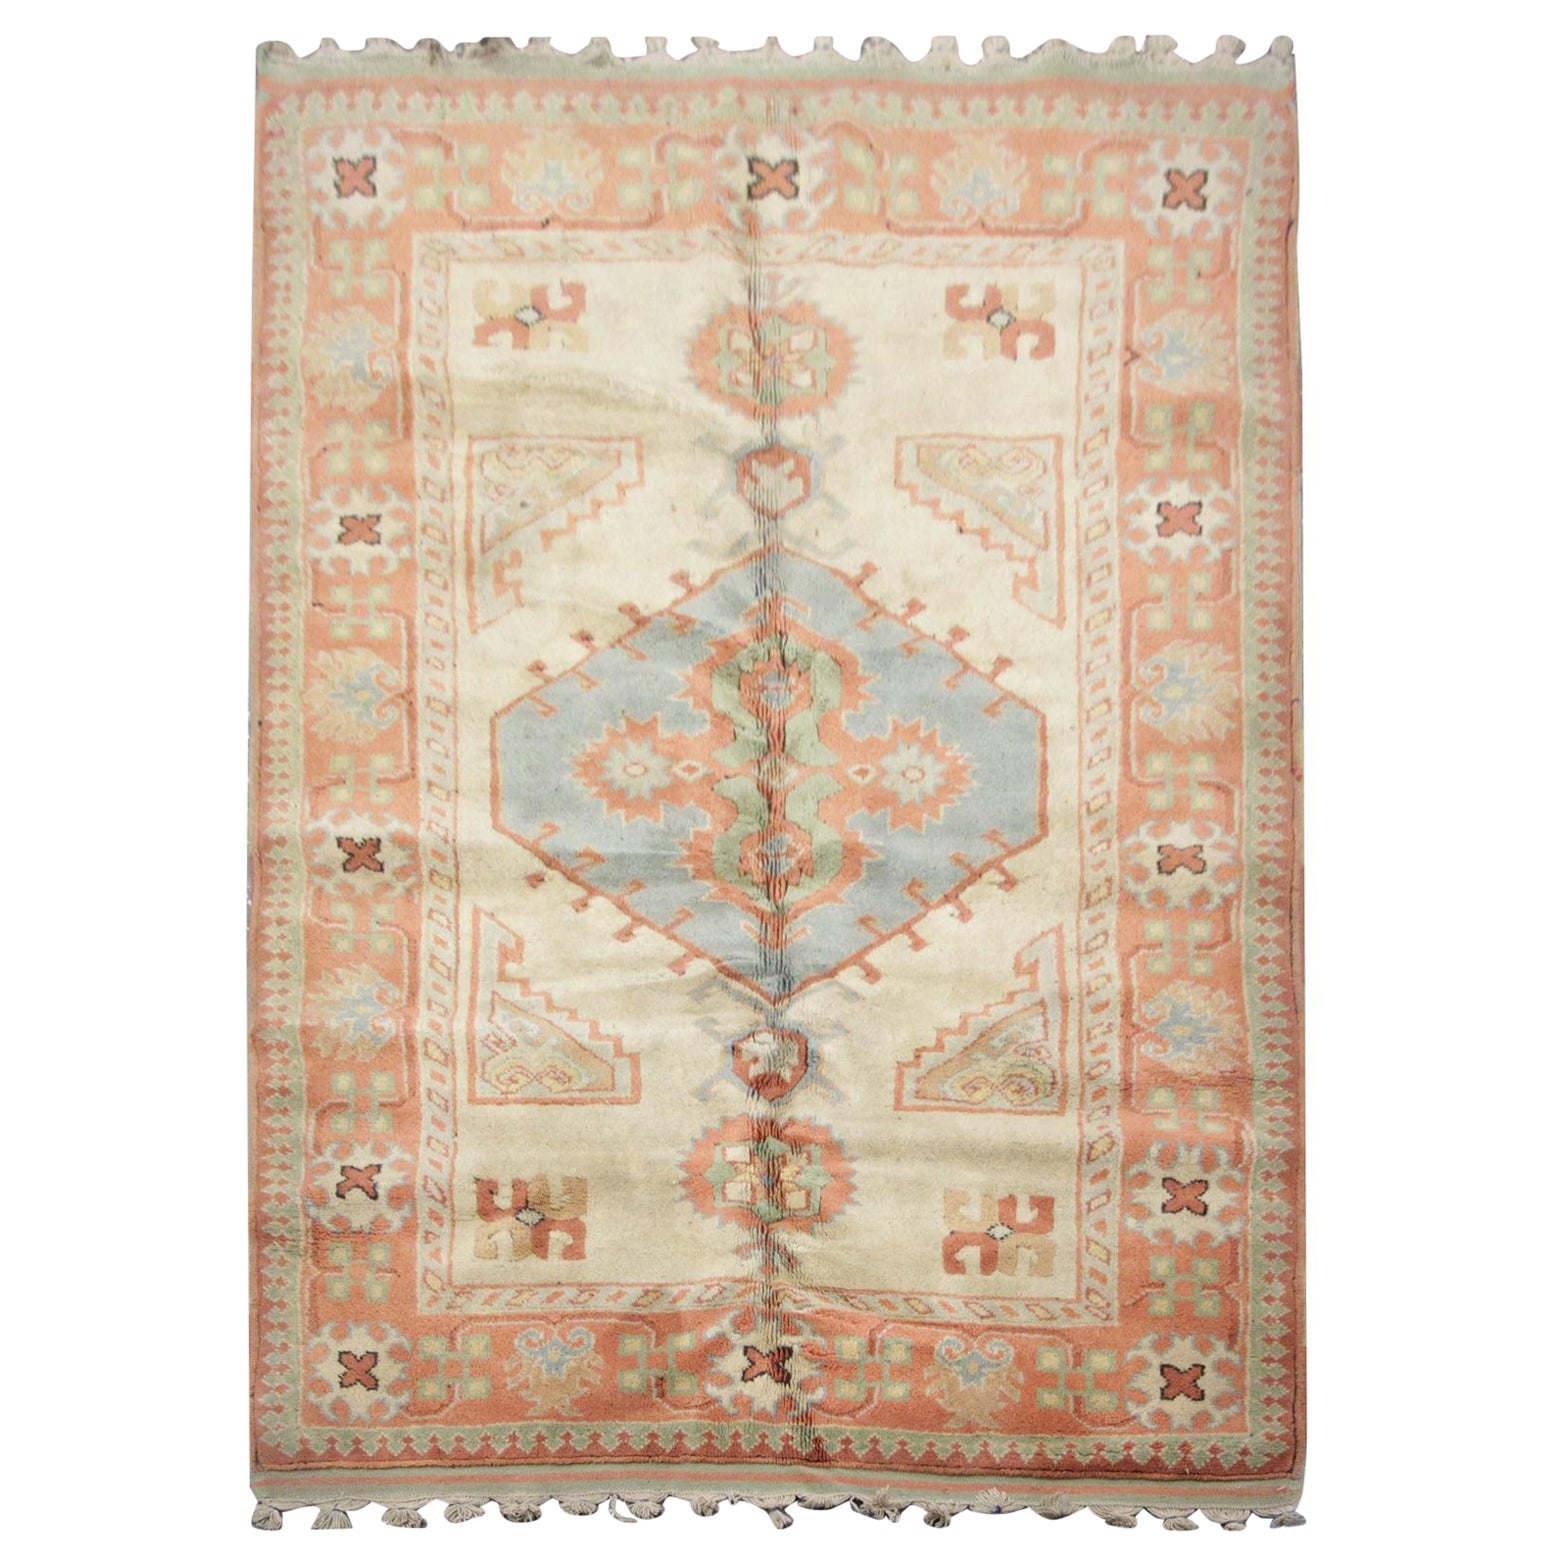 Vintage Rug Handmade Carpet, Turkish Rug Milas Rustic Living Room Rugs for Sale For Sale